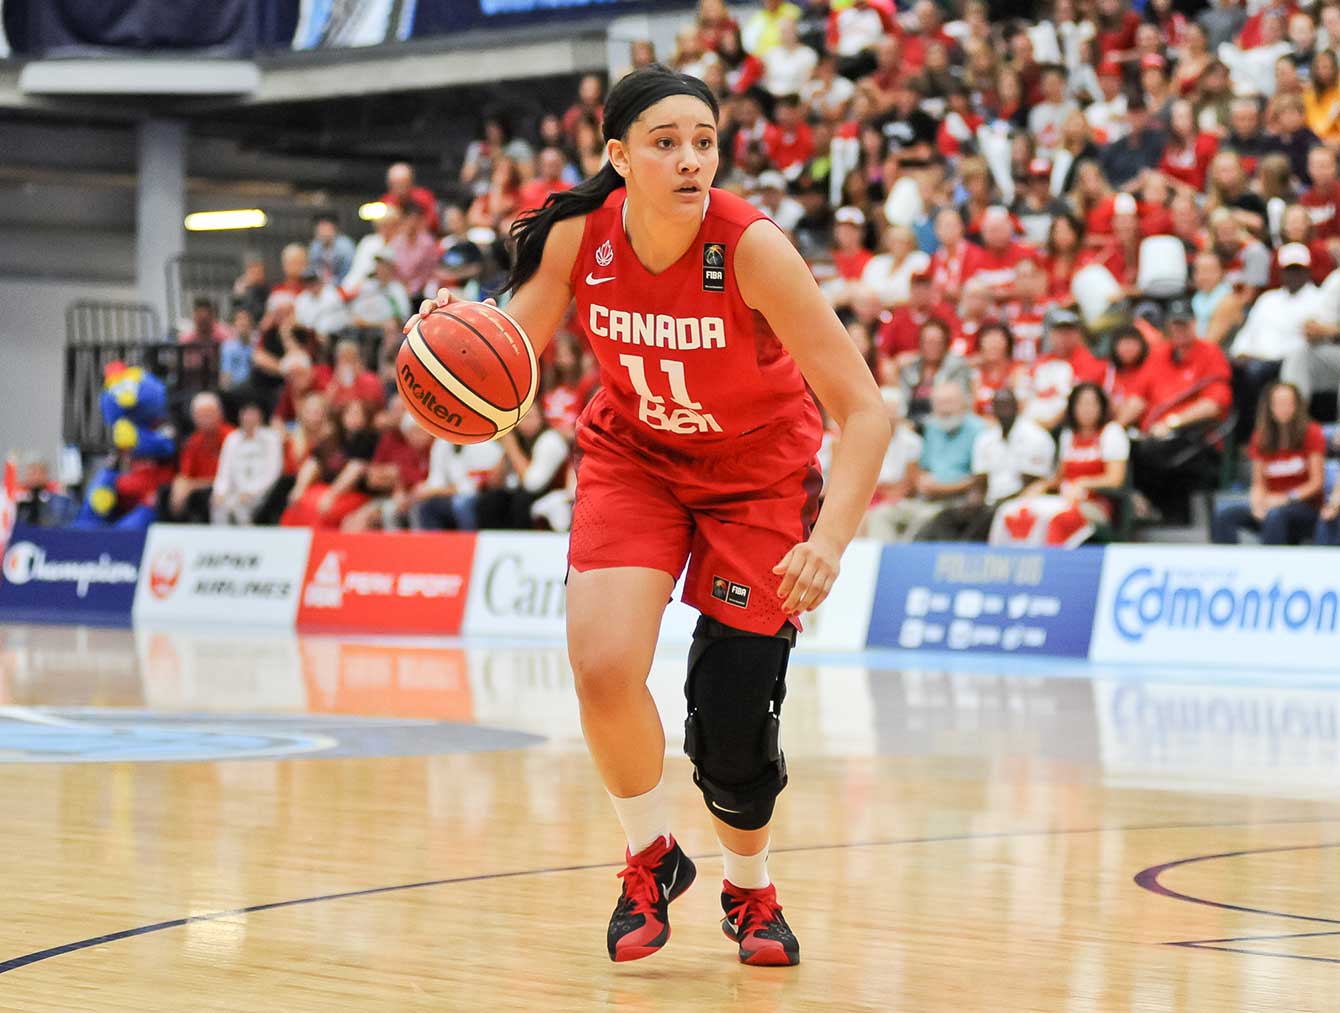 Natalie Achonwa played 18:17 in the game. (Photo: FIBA)